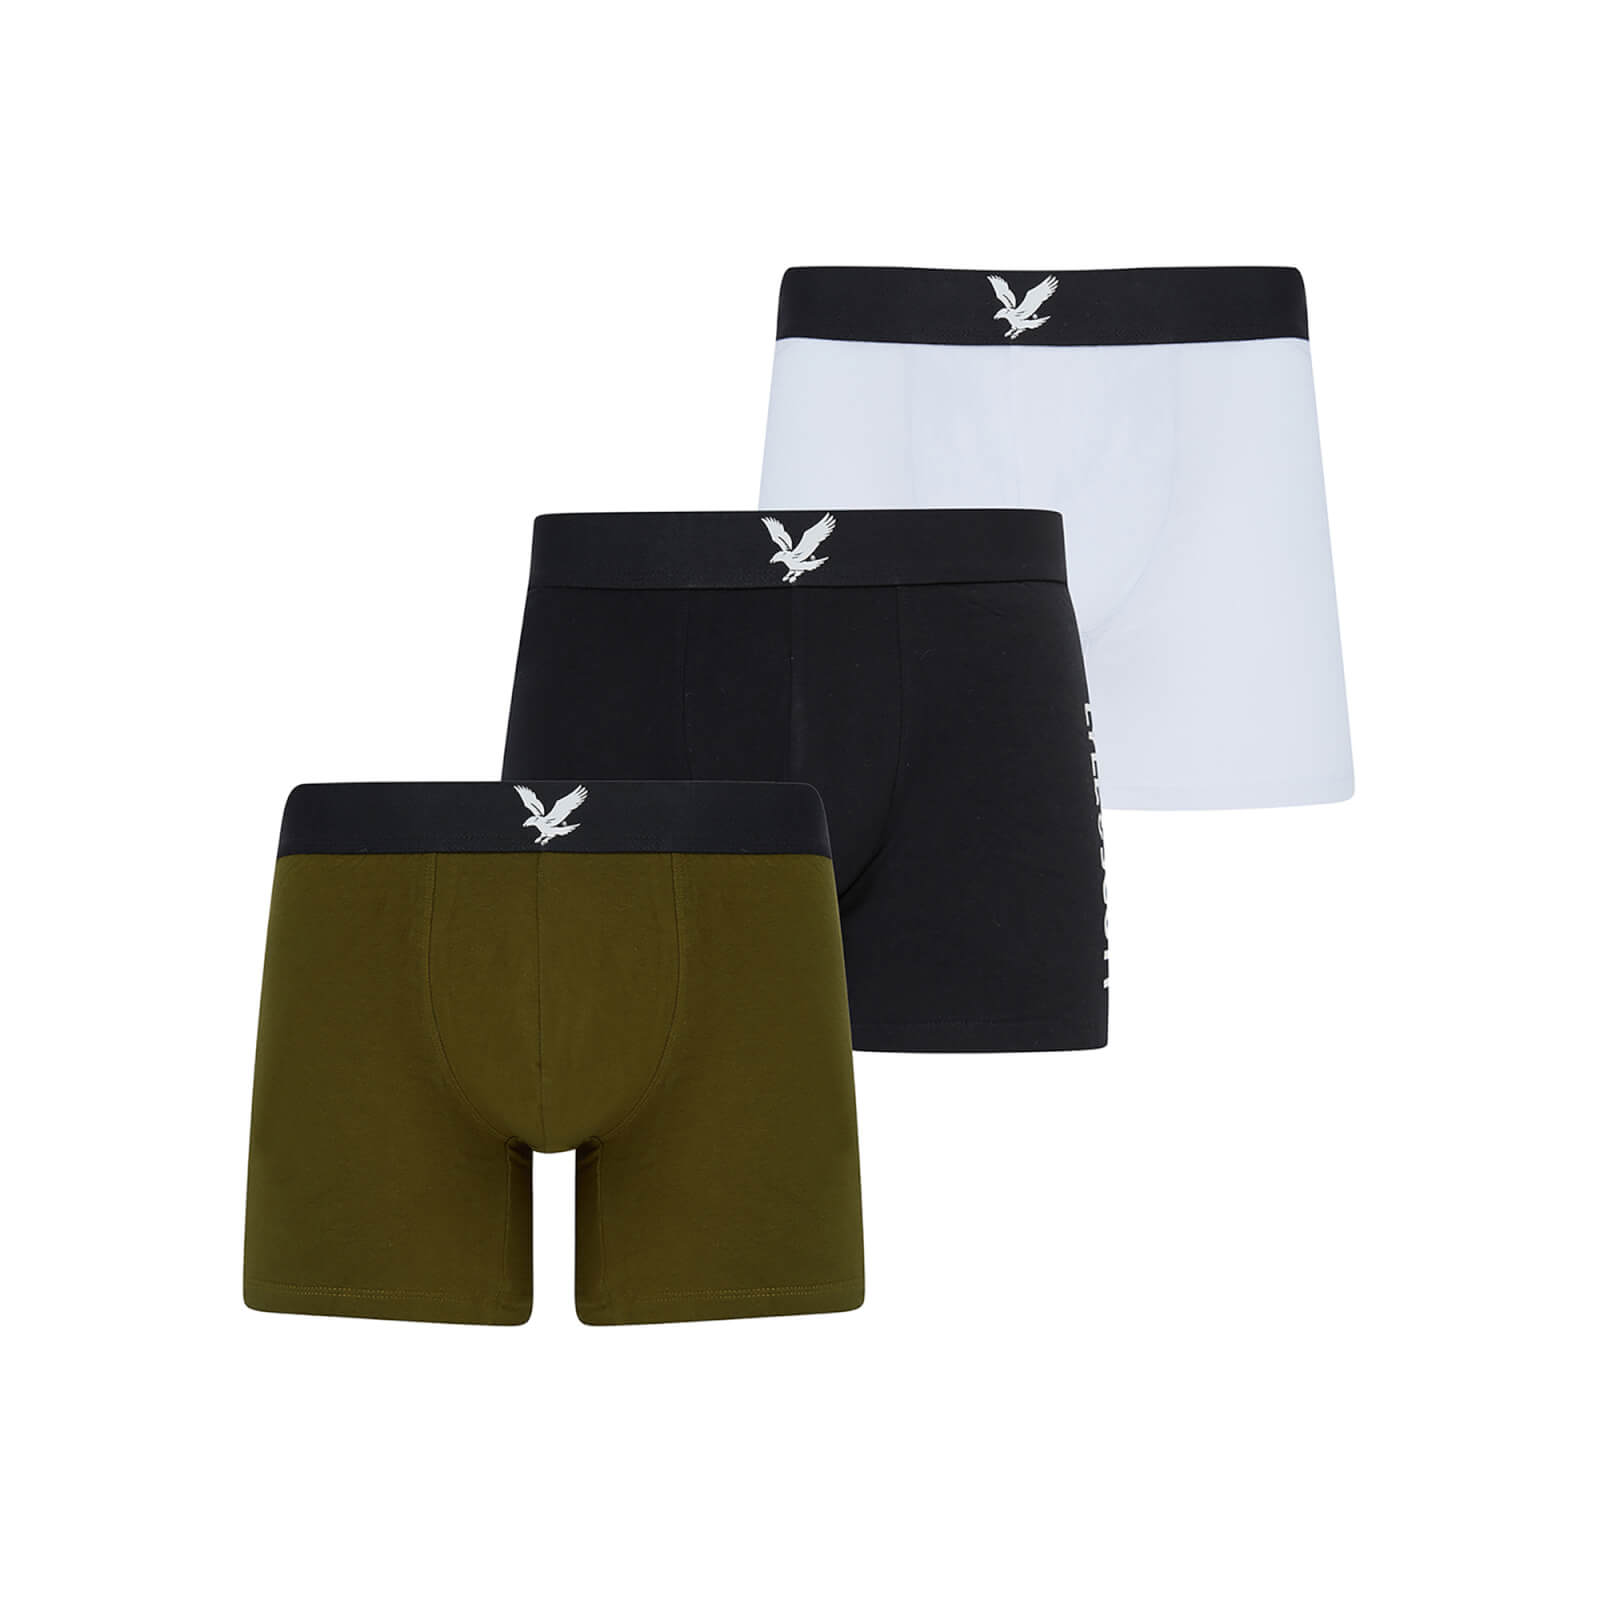 

Lyle & Scott Men's Jonathan 3 Pack Underwear Trunks - Dark Olive/Black/Bright White - XXL